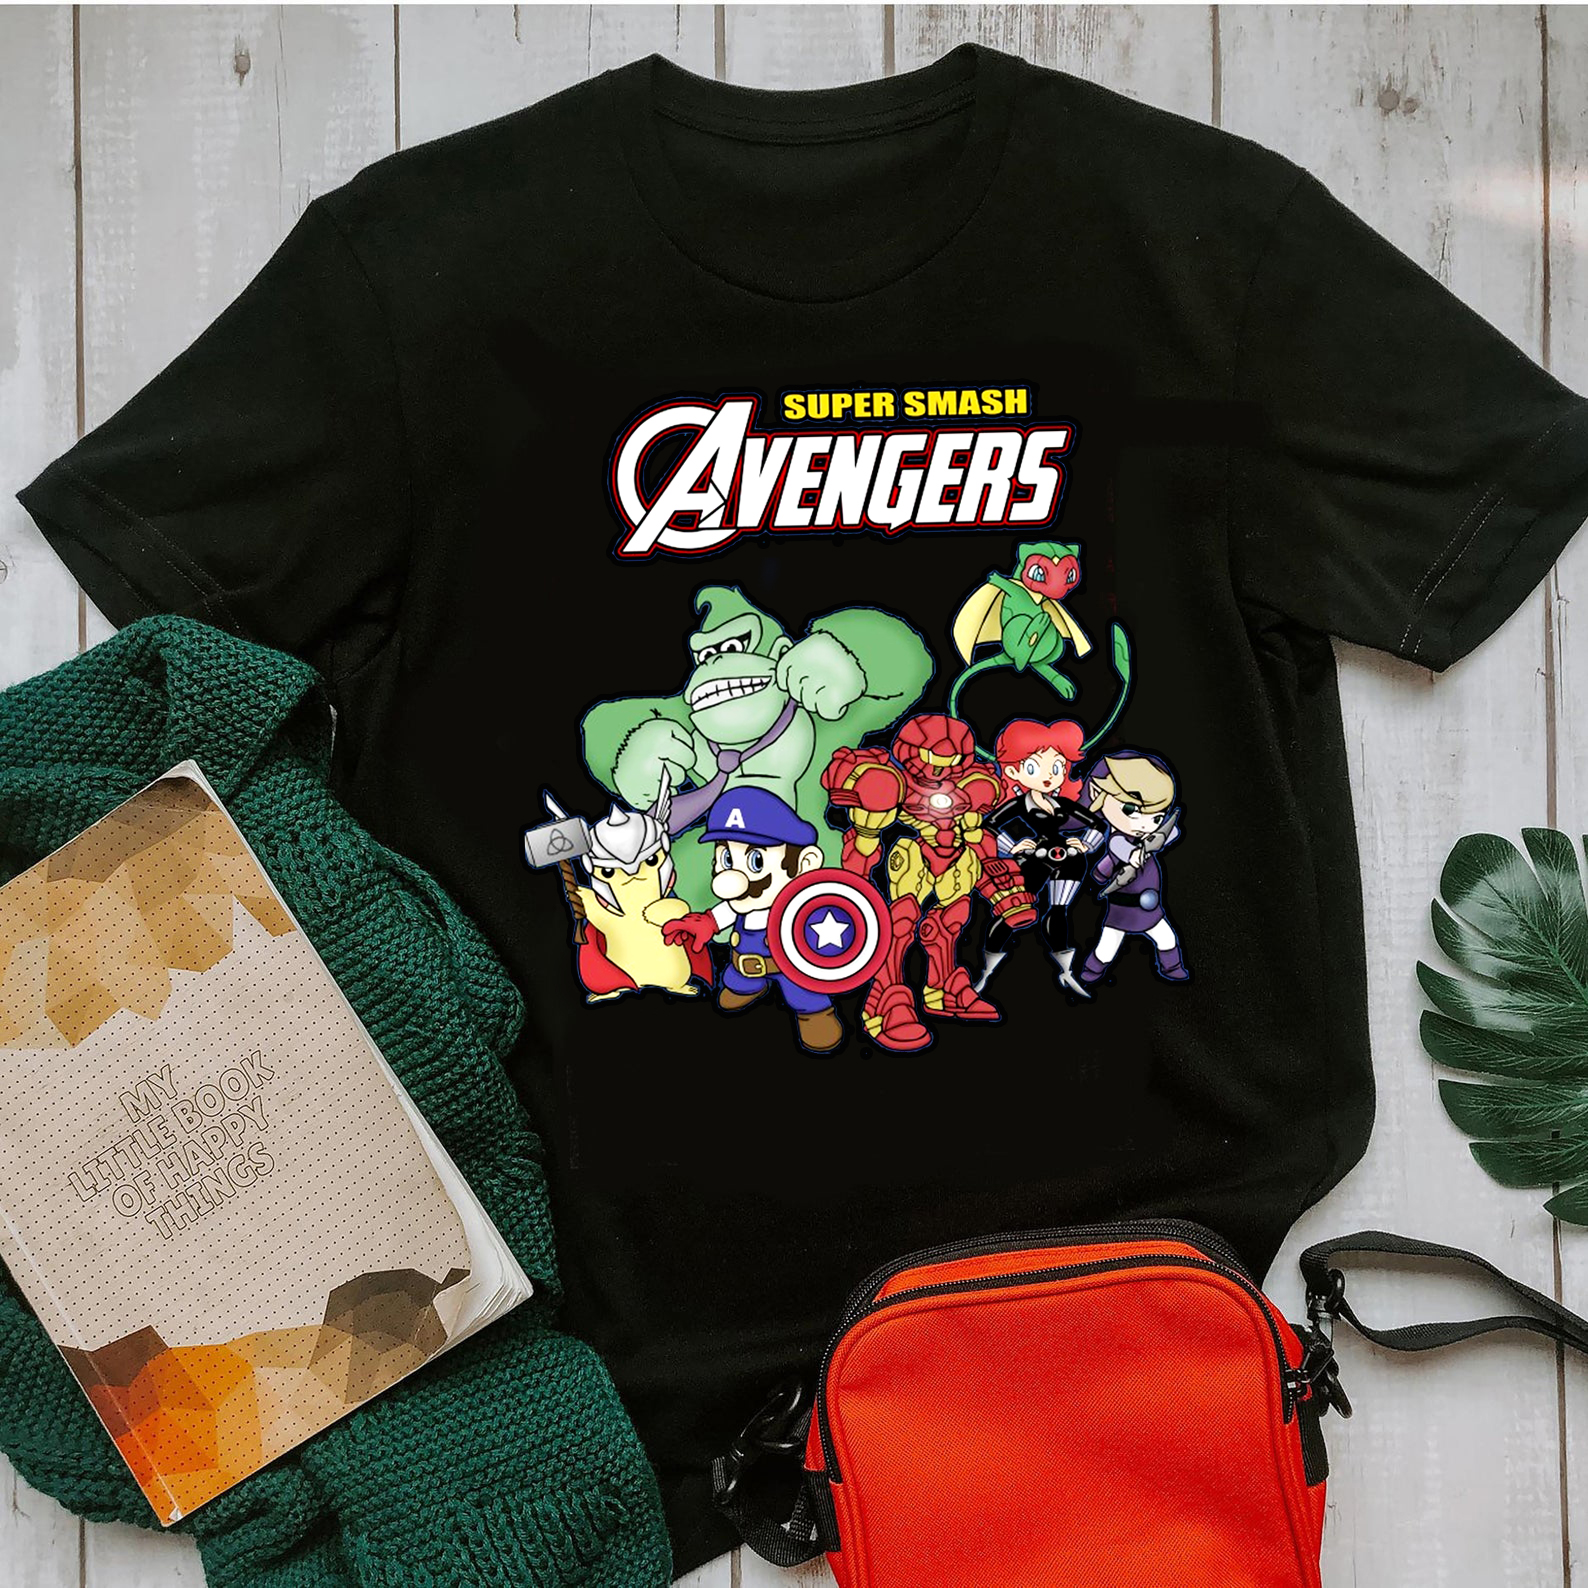 Super Smash Avenger Shirt, Super Mario Shirt, Pokemon Shirt, Captain American Shirt, Hulk Shirt, Thor Shirt